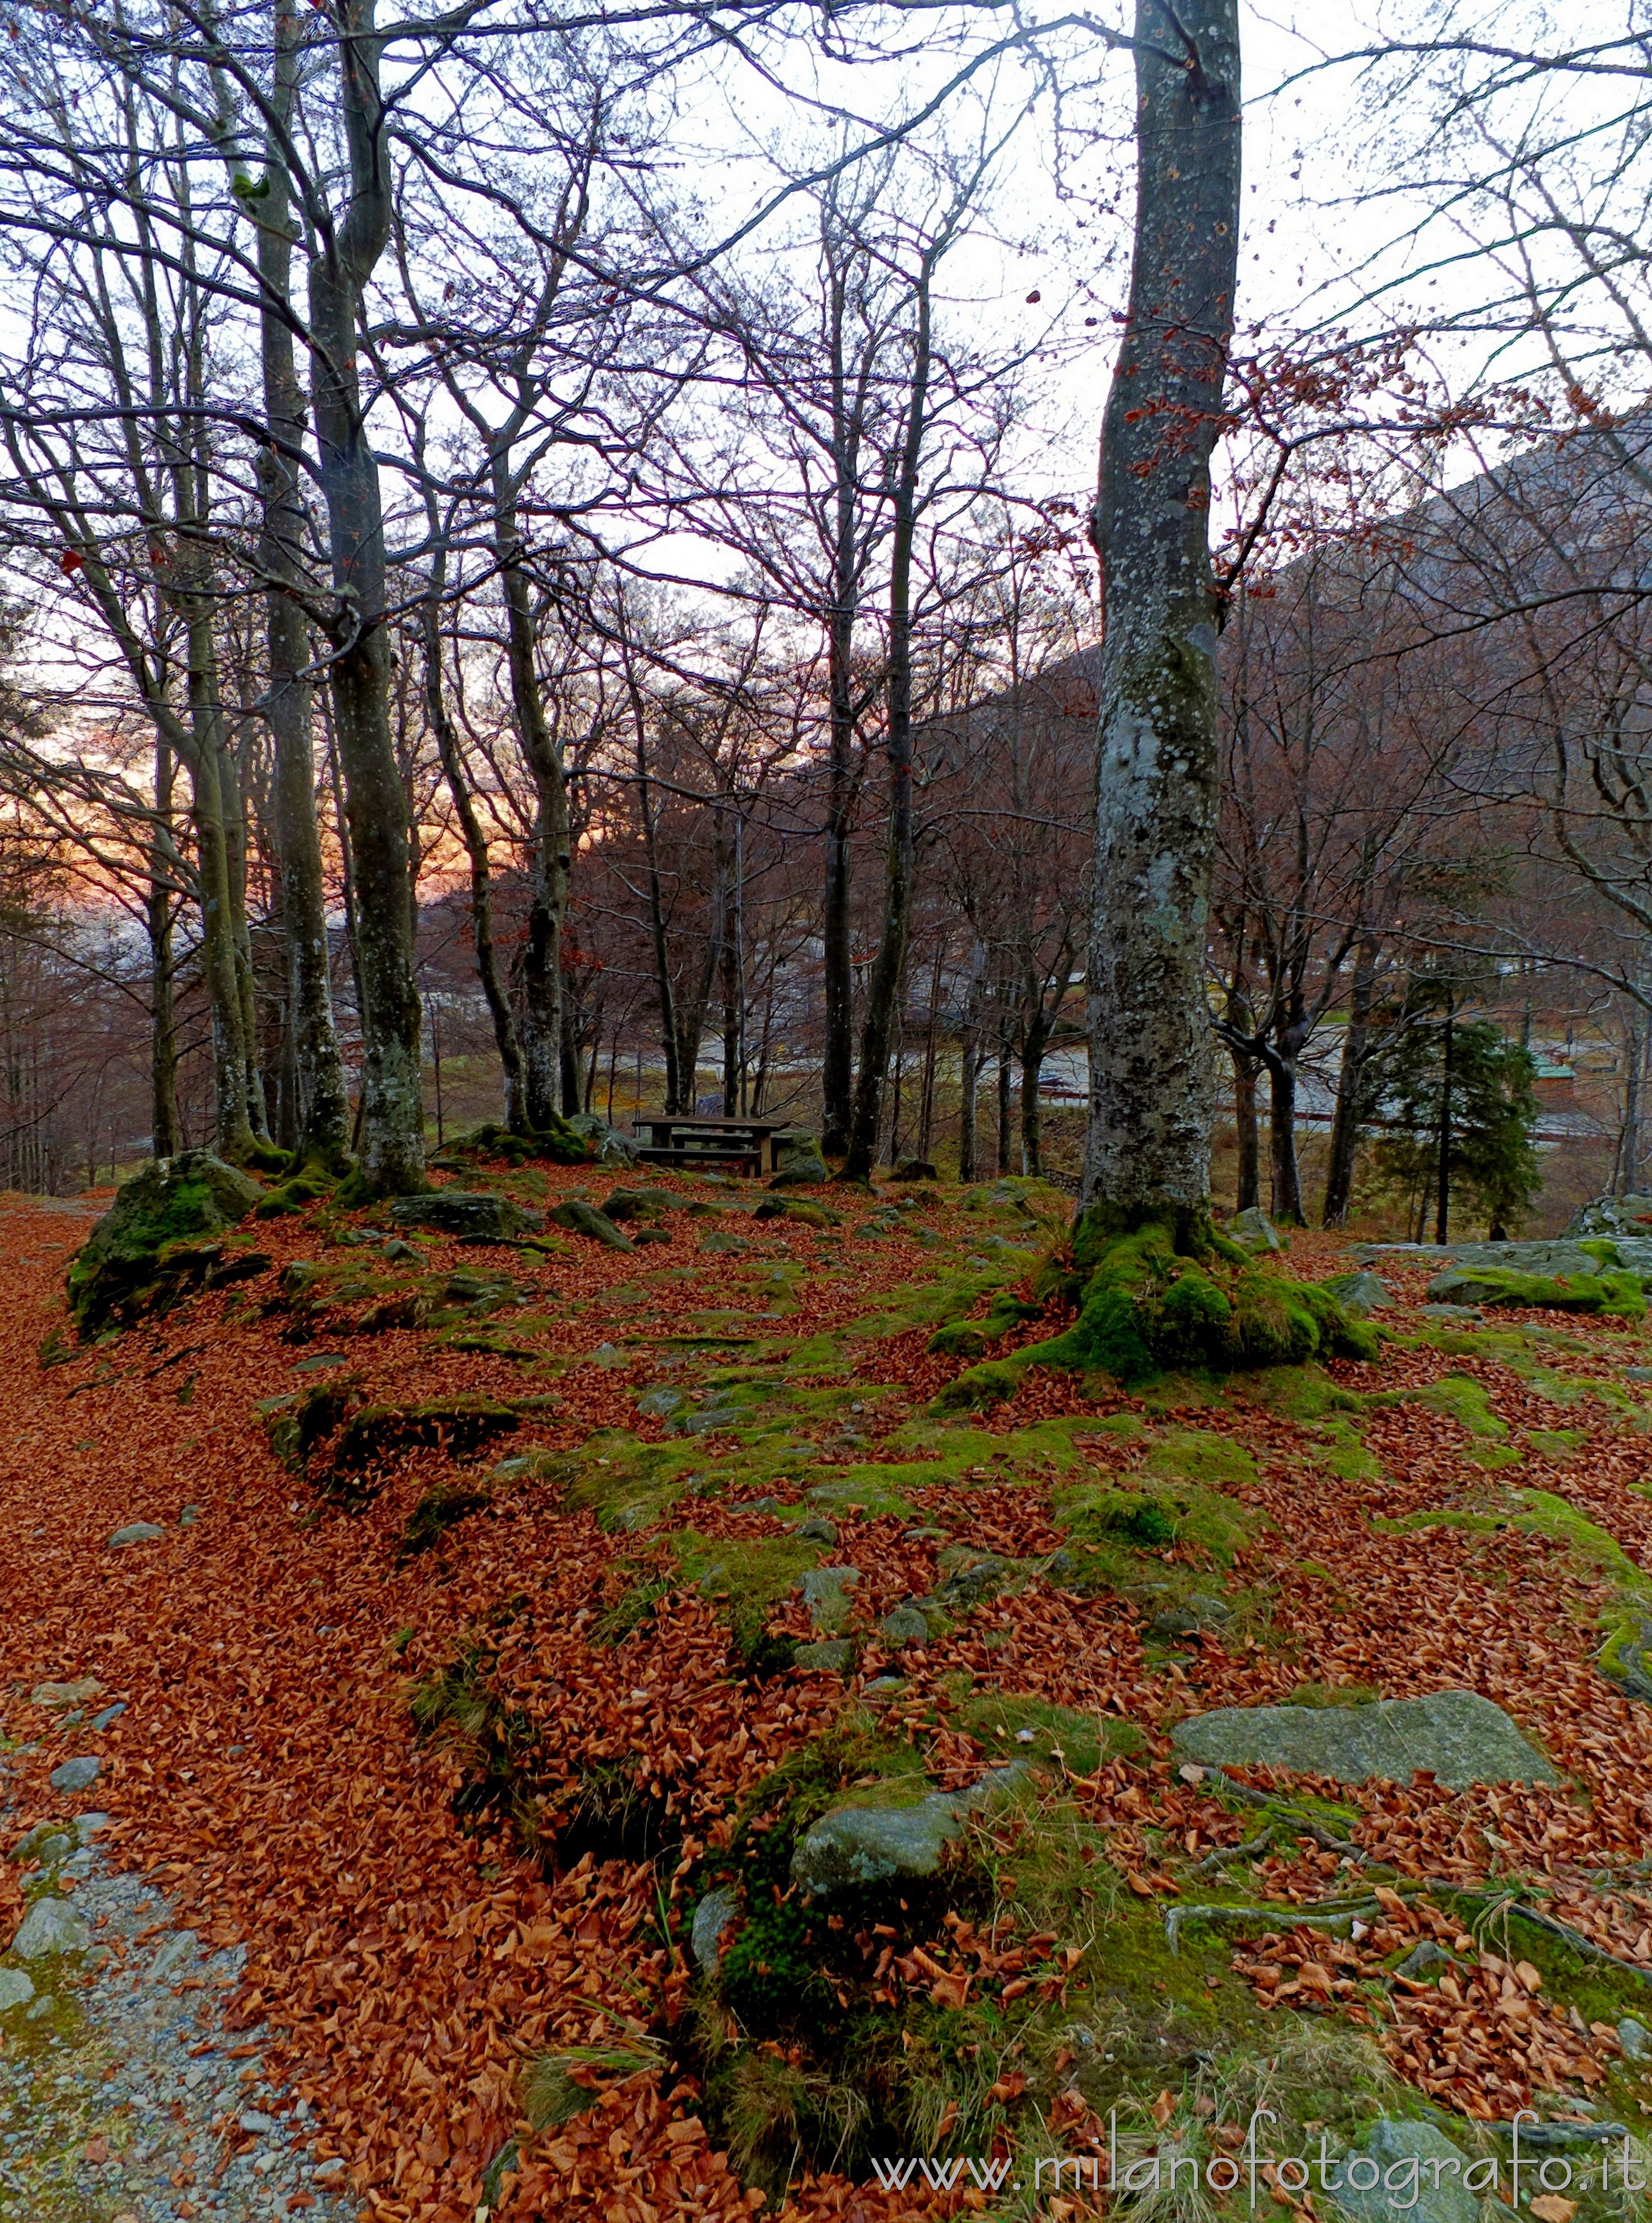 Biella, Italy: Autumn darkening in the woods around the Sanctuary of Oropa - Biella, Italy